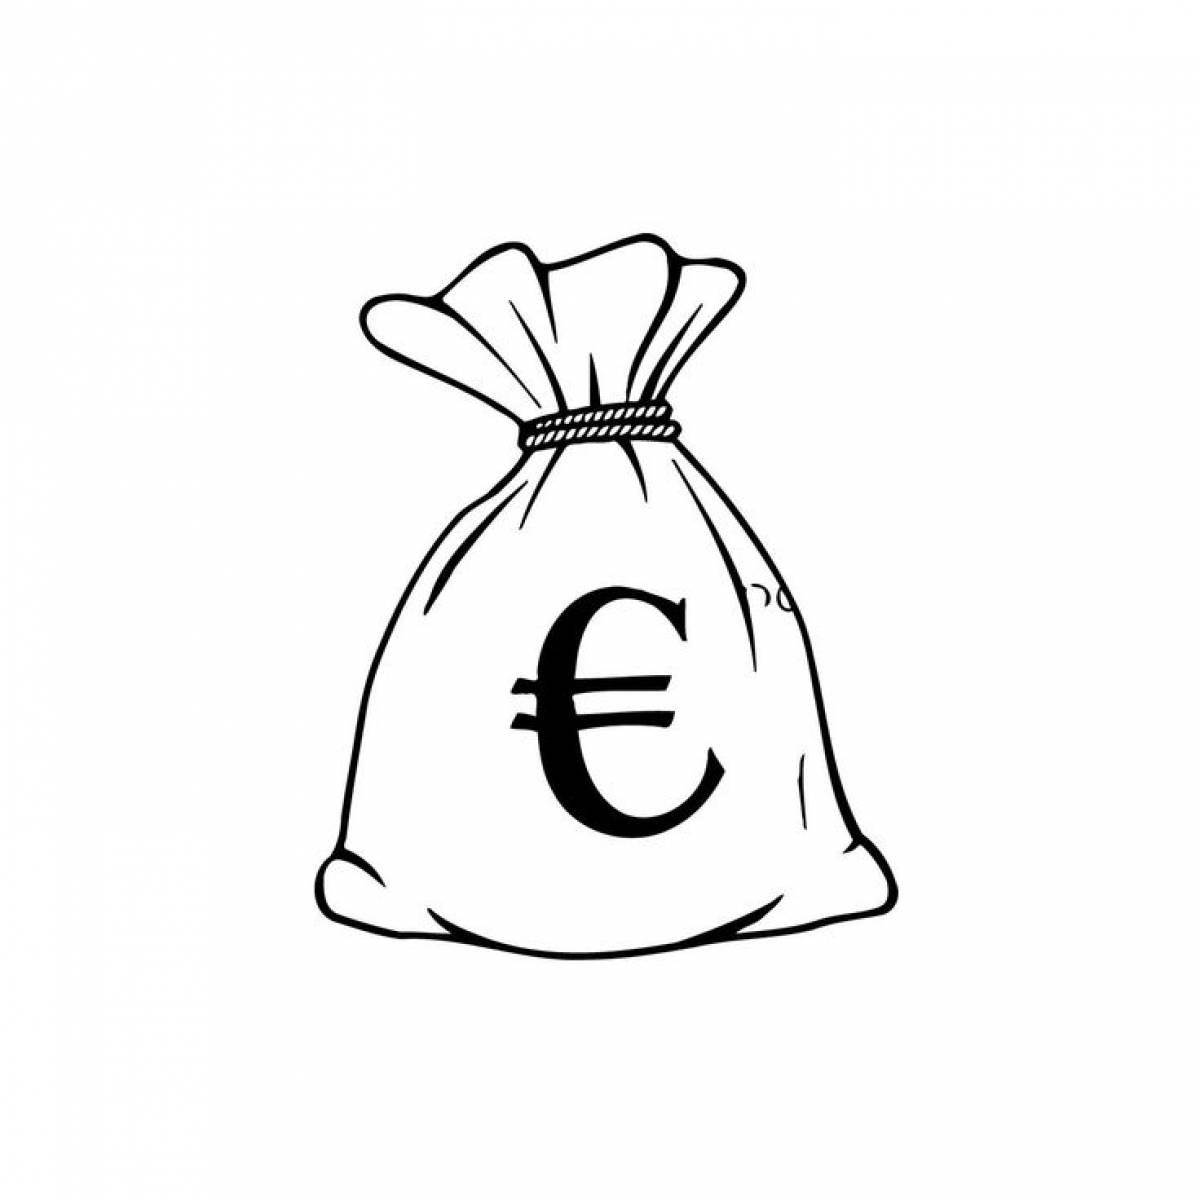 Мешок с евро